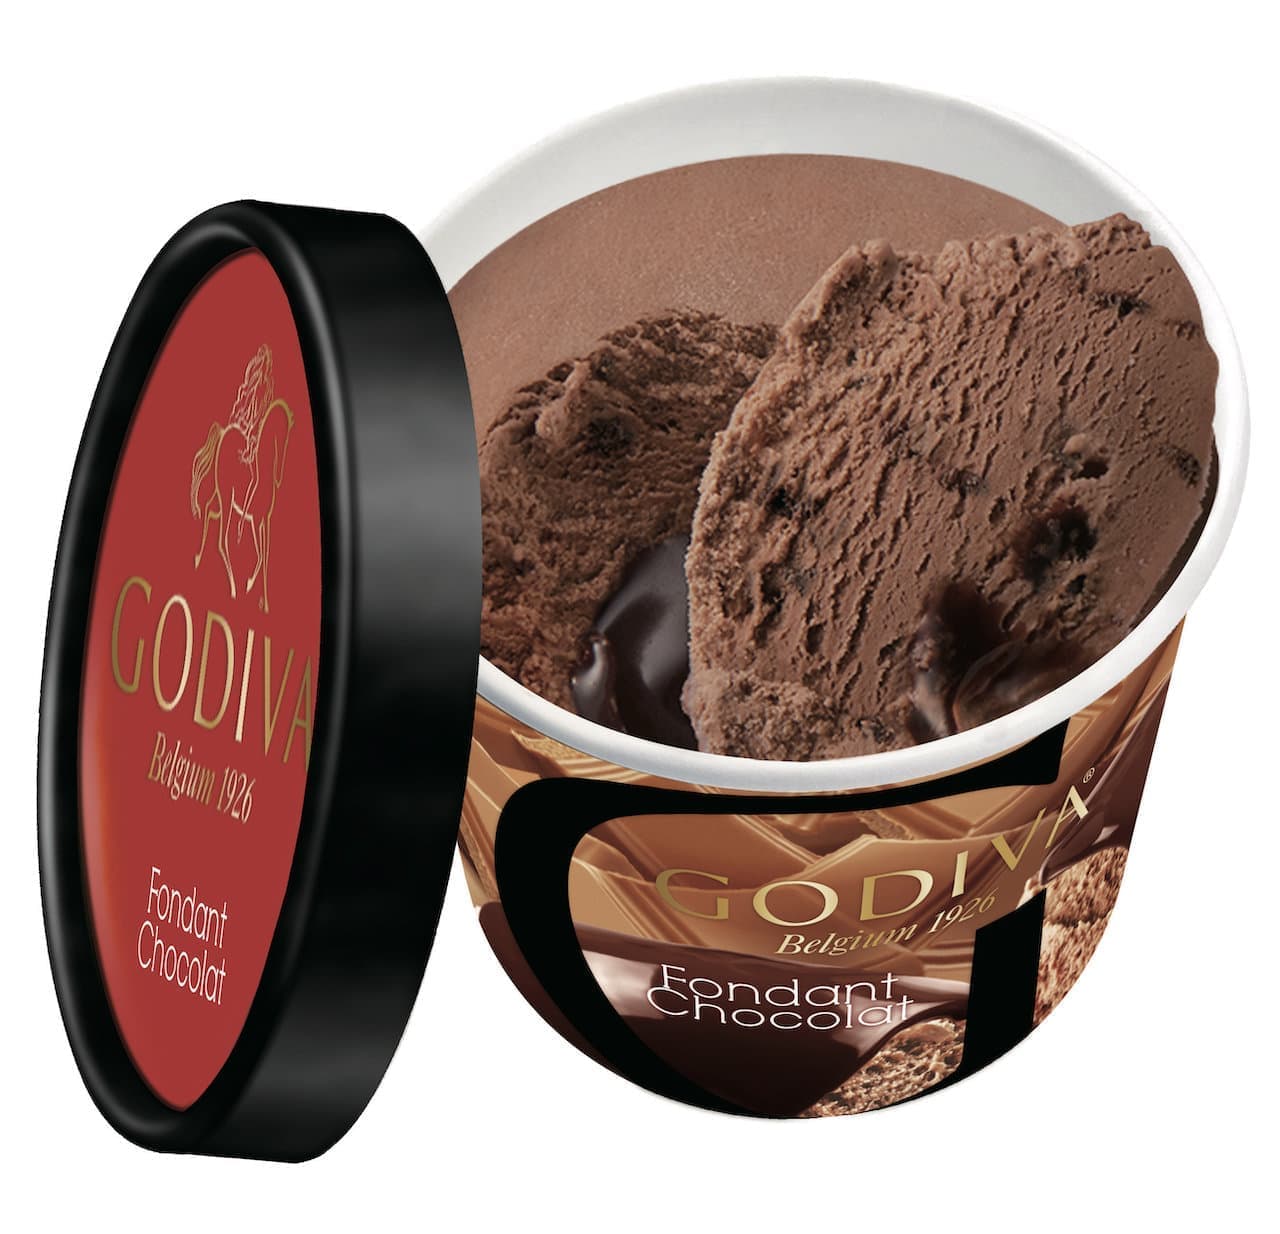 Godiva Cup Ice Cream "Fondant Chocolat